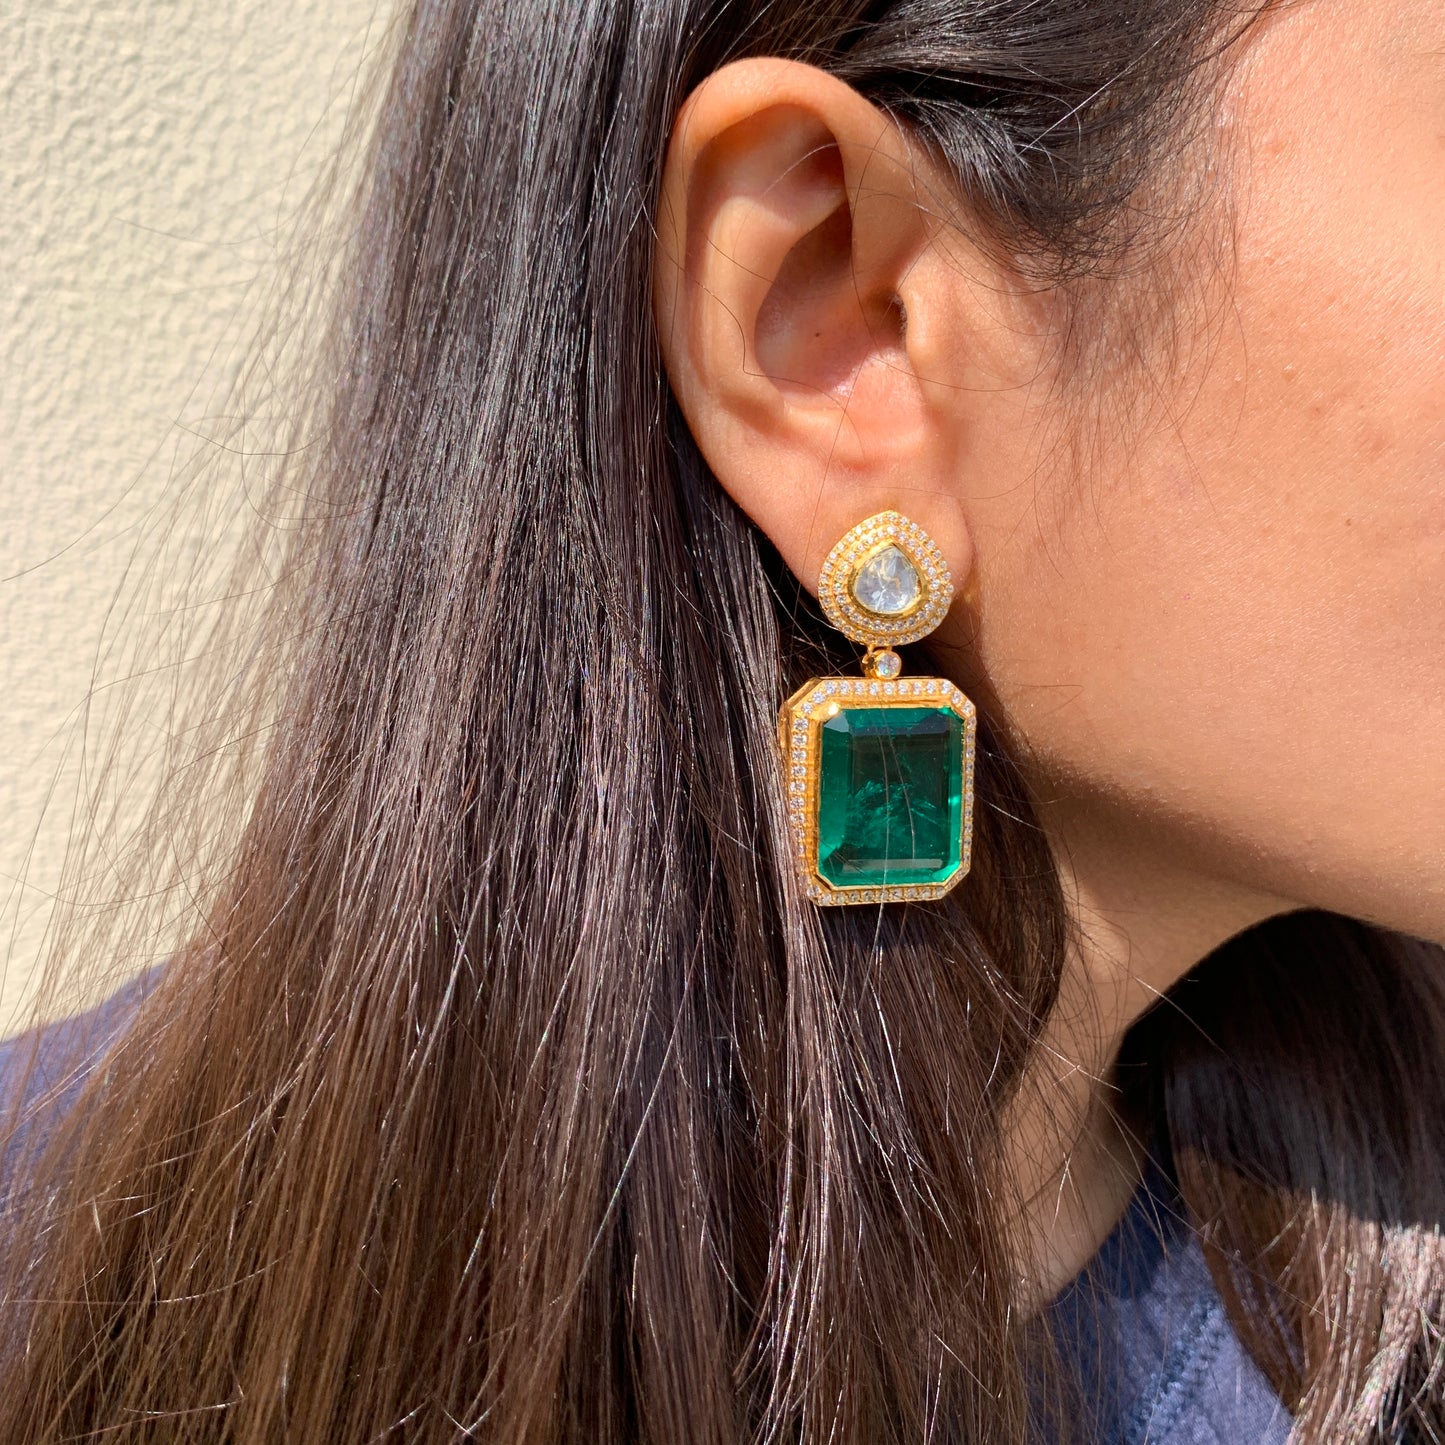 Emerald Polki Earrings